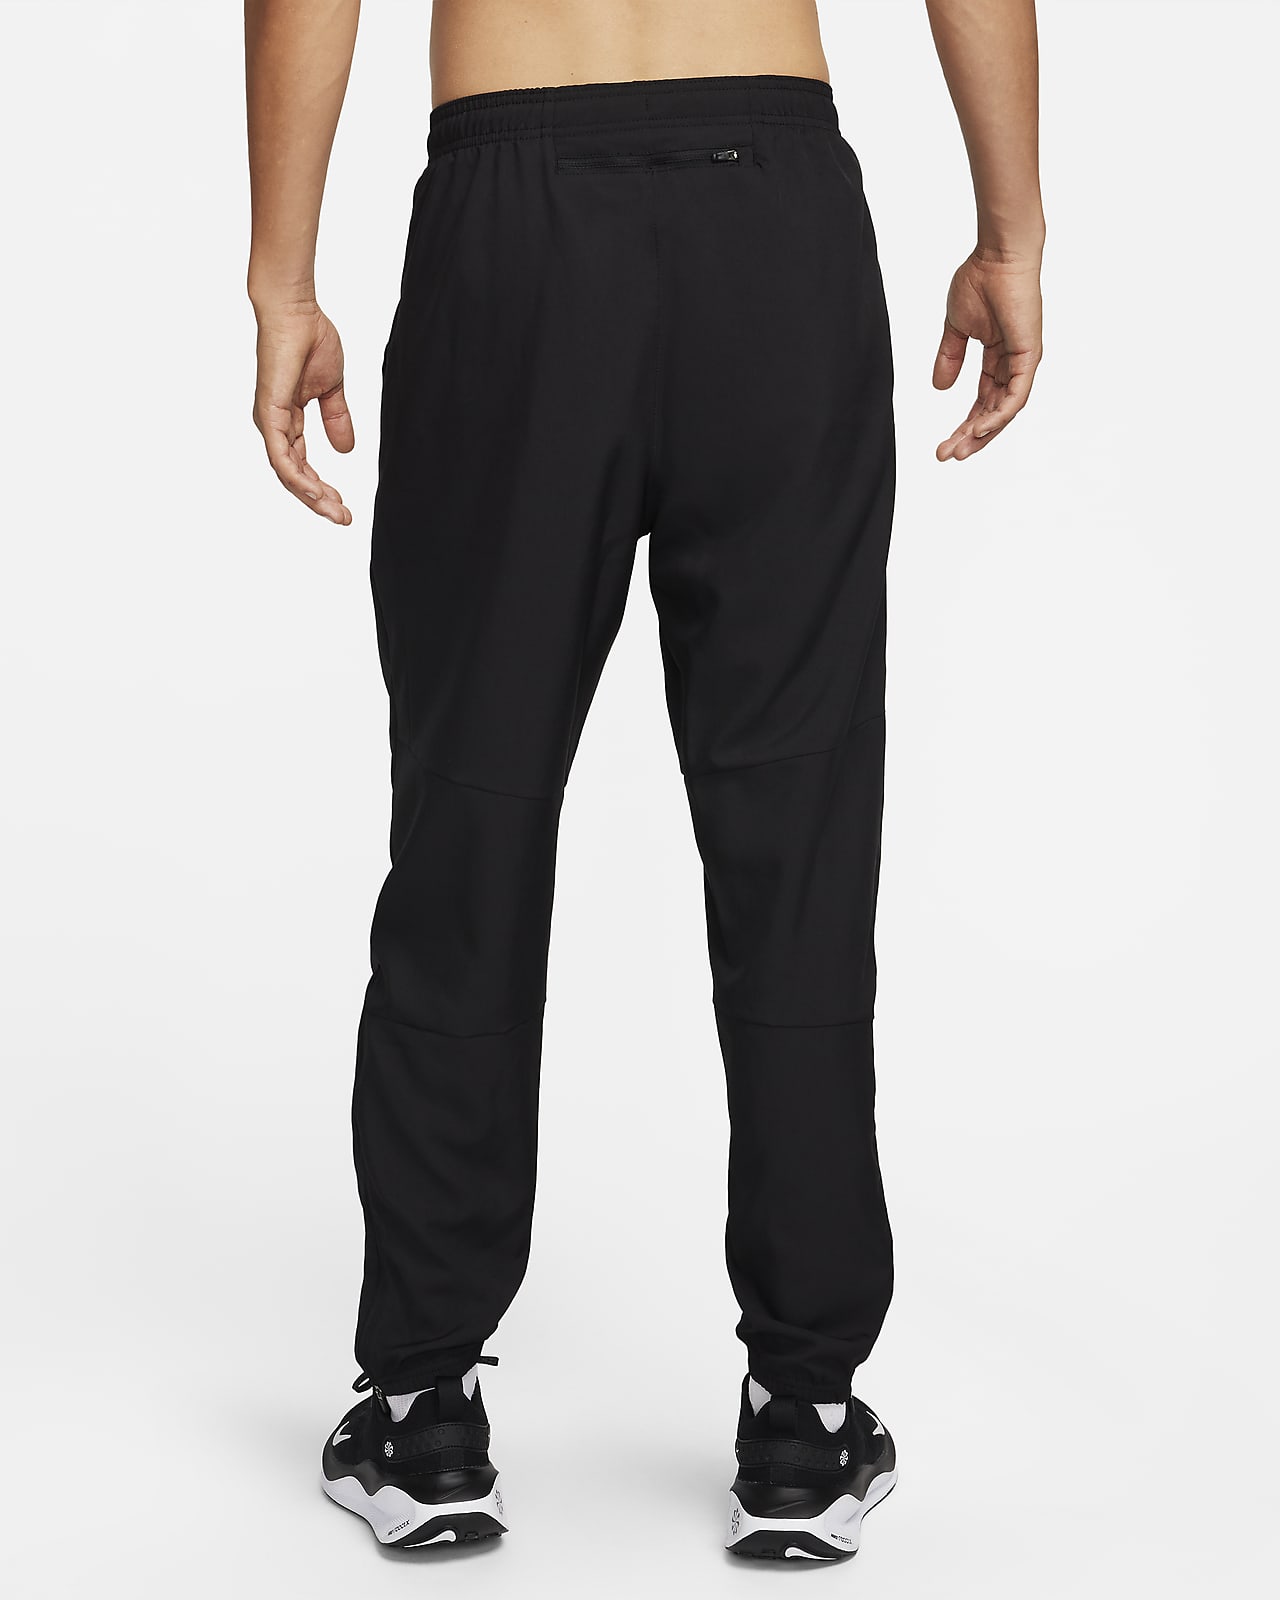 Nike Men's Repel Challenger Tight Running Pants Black Reflective